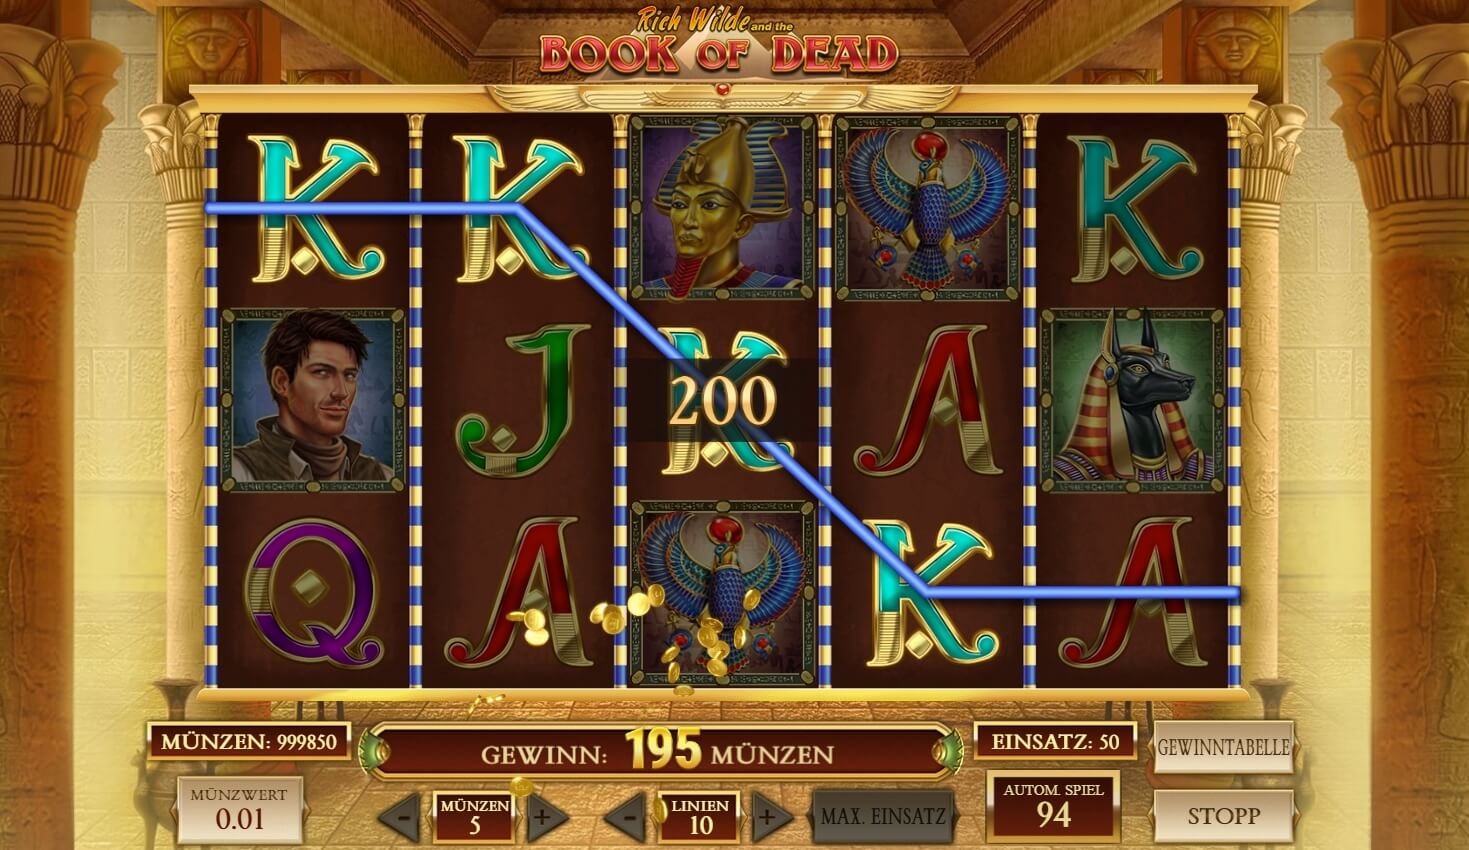 Winward casino 100 free spins